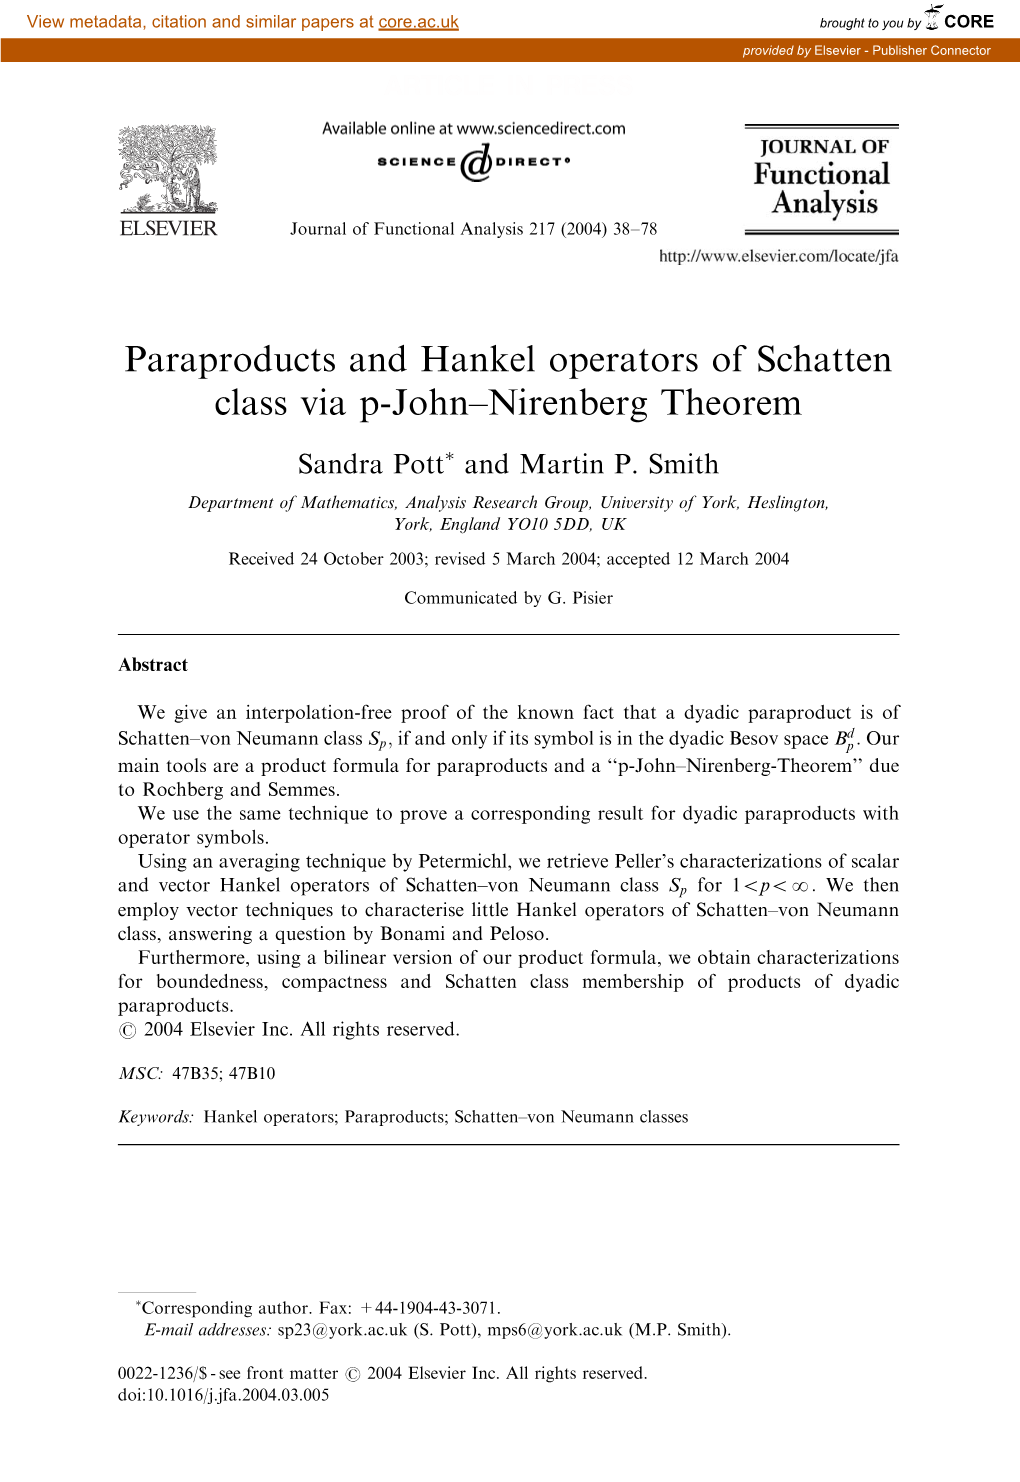 Paraproducts and Hankel Operators of Schatten Class Via P-John–Nirenberg Theorem